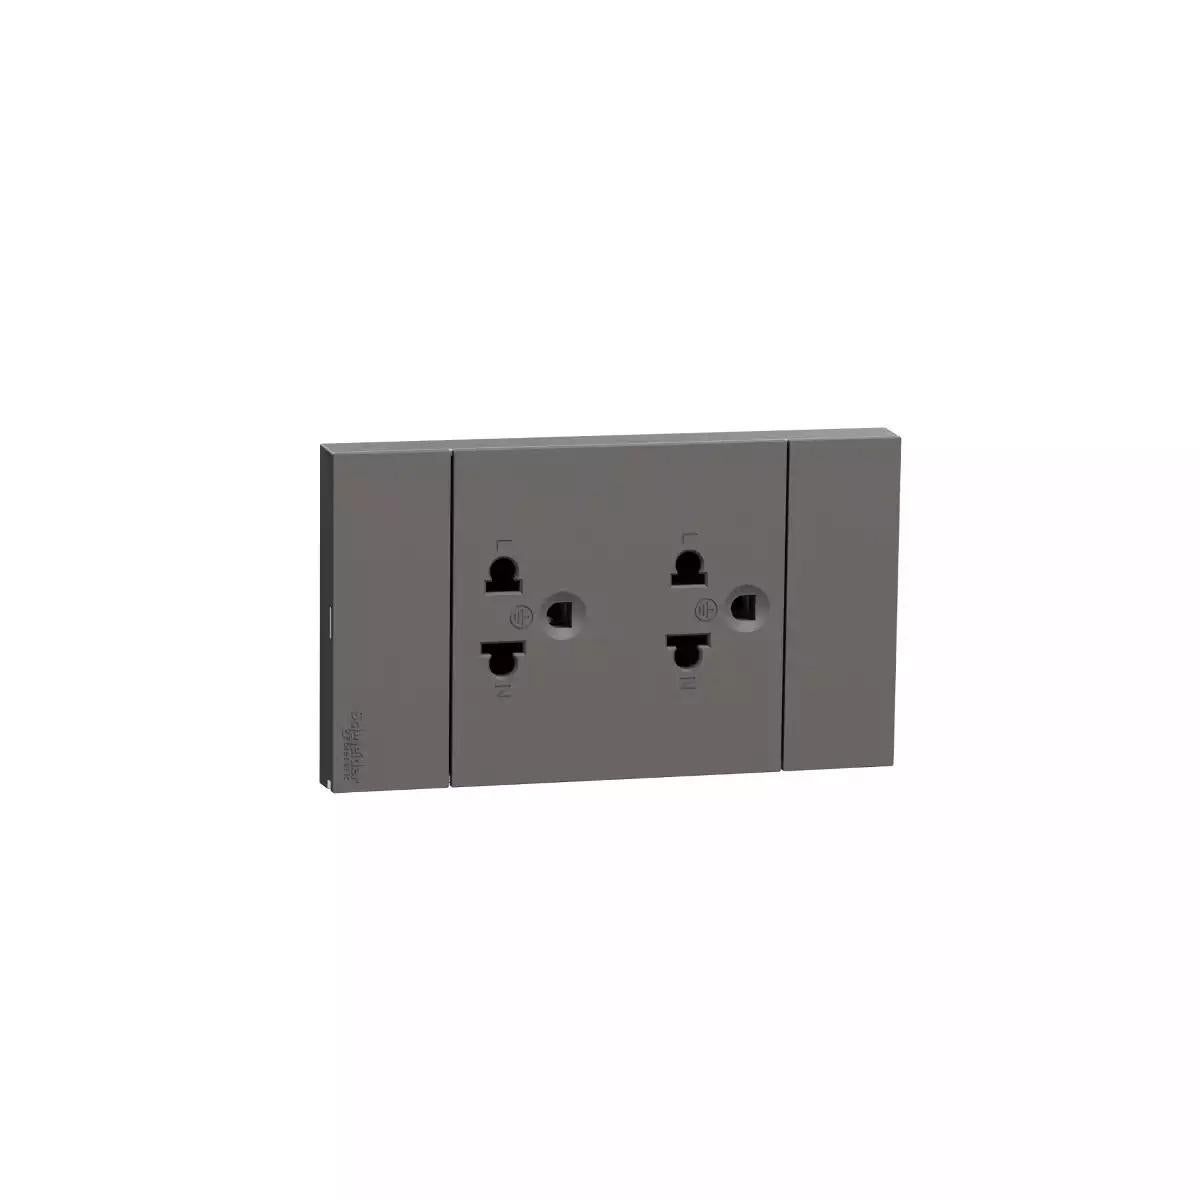 Socket-outlet, Avataron A, Universal, 16A, 250V, 2G, 3 Pin, Black